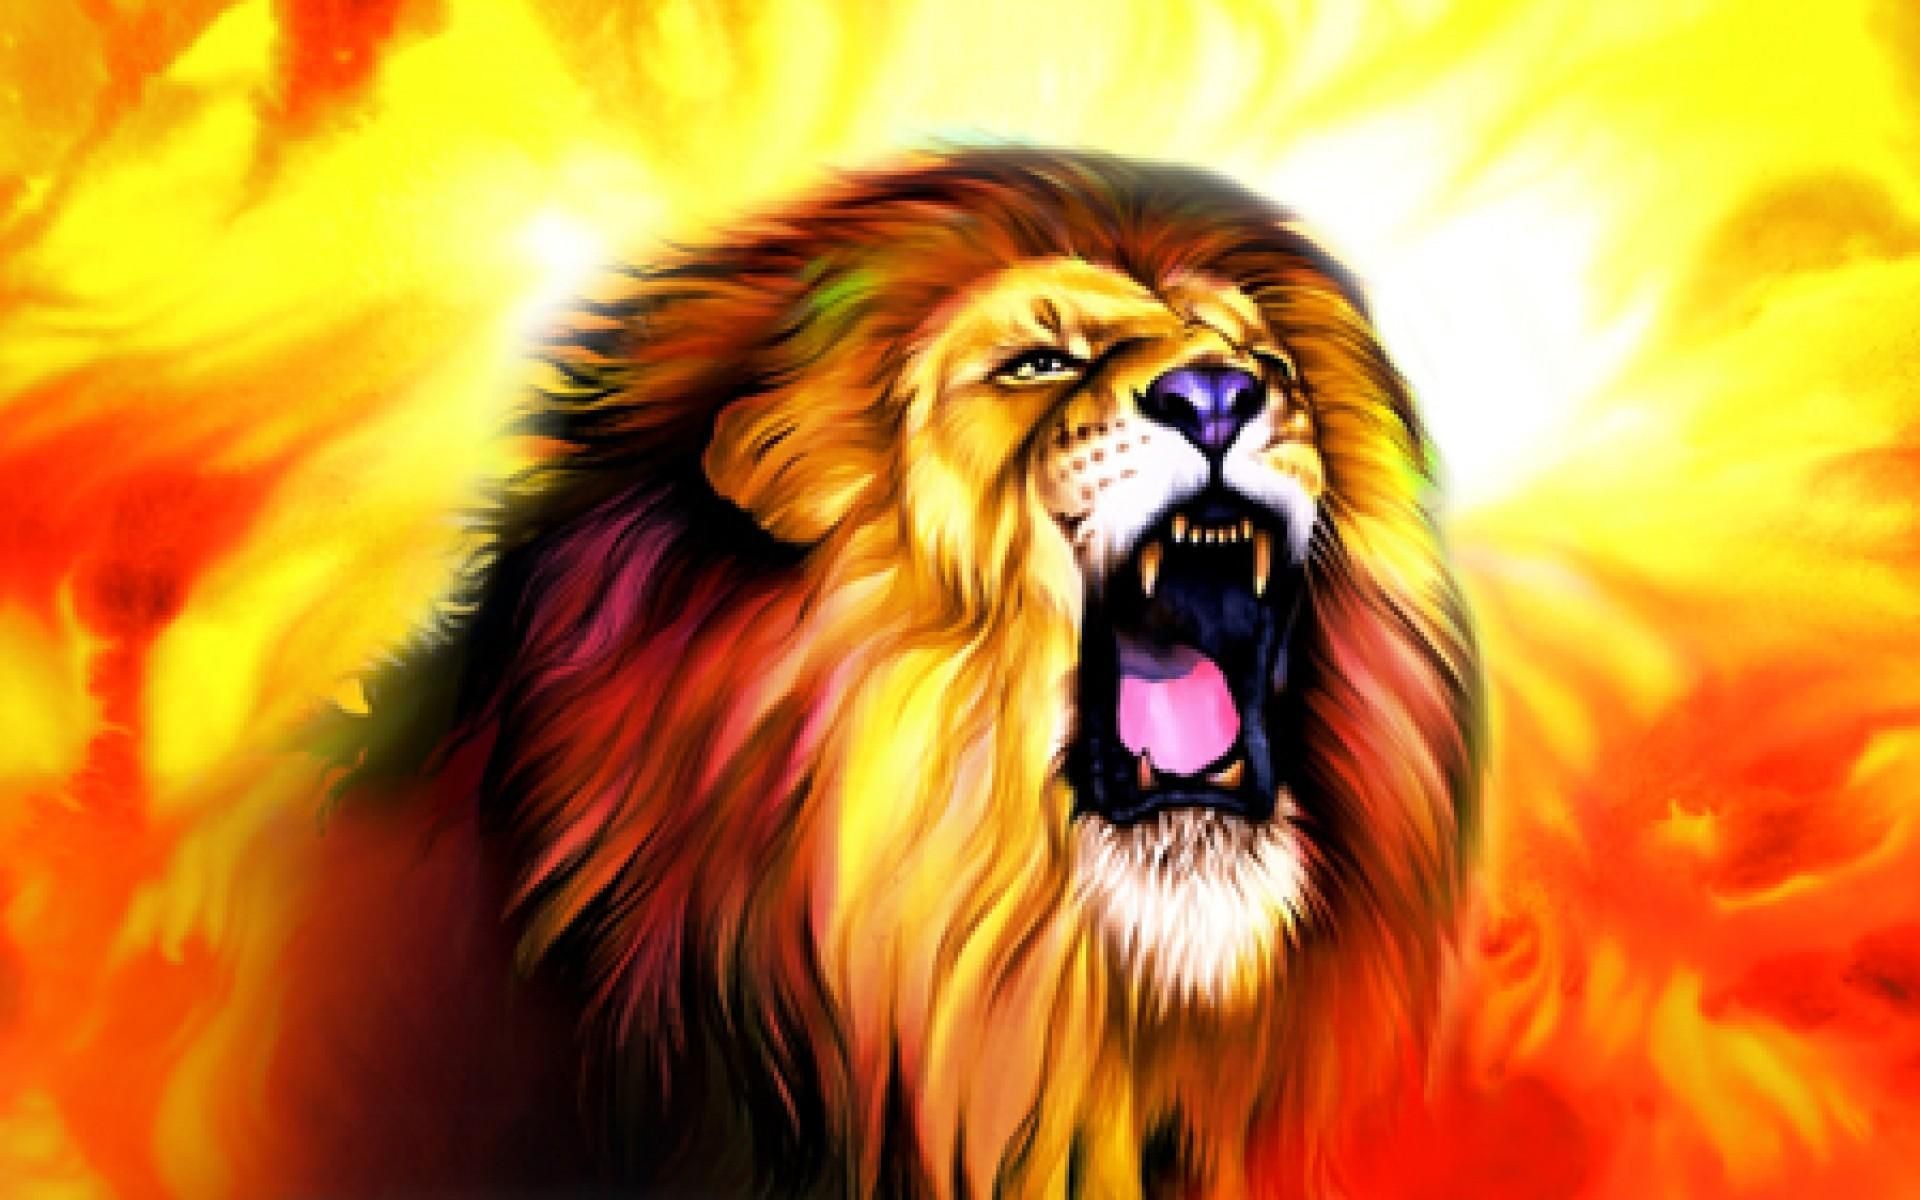 Roaring Lion Wallpaper. Background. Photo. Image